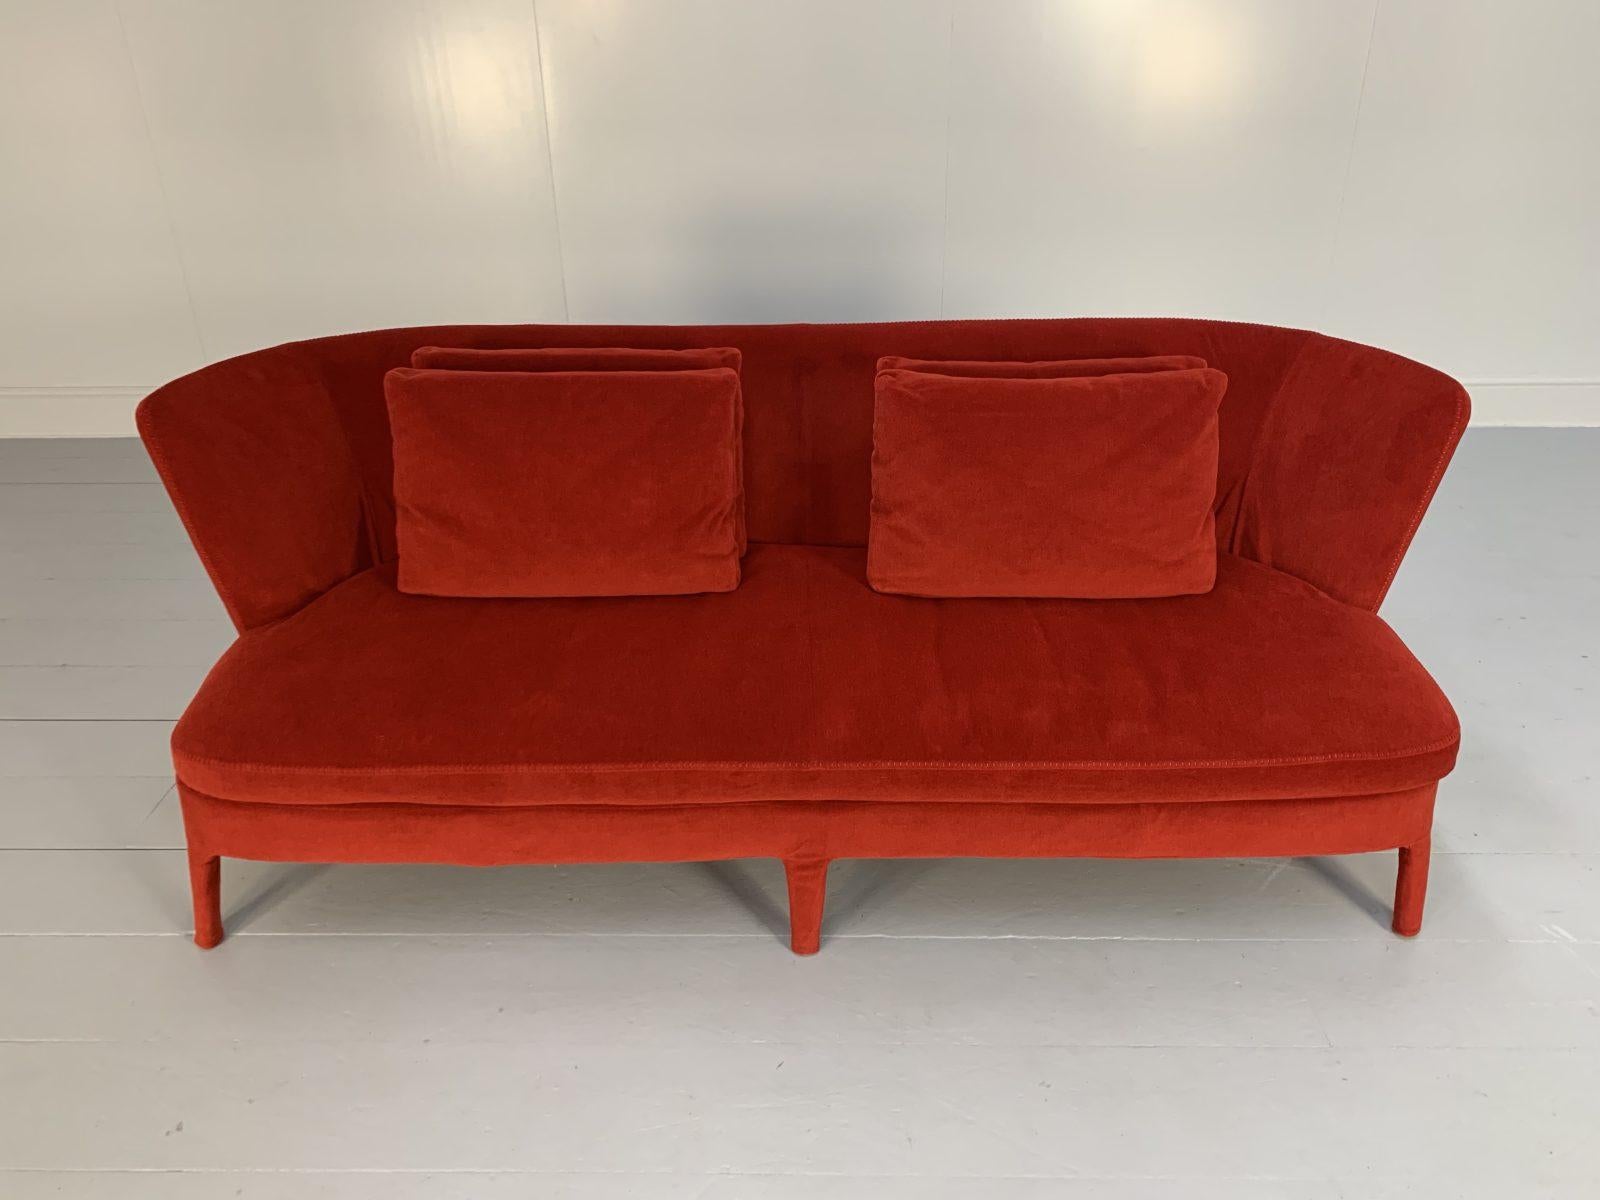 Contemporary B&B Italia Sofa, “Maxalto Febo” 3-Seat, in Red Velvet For Sale